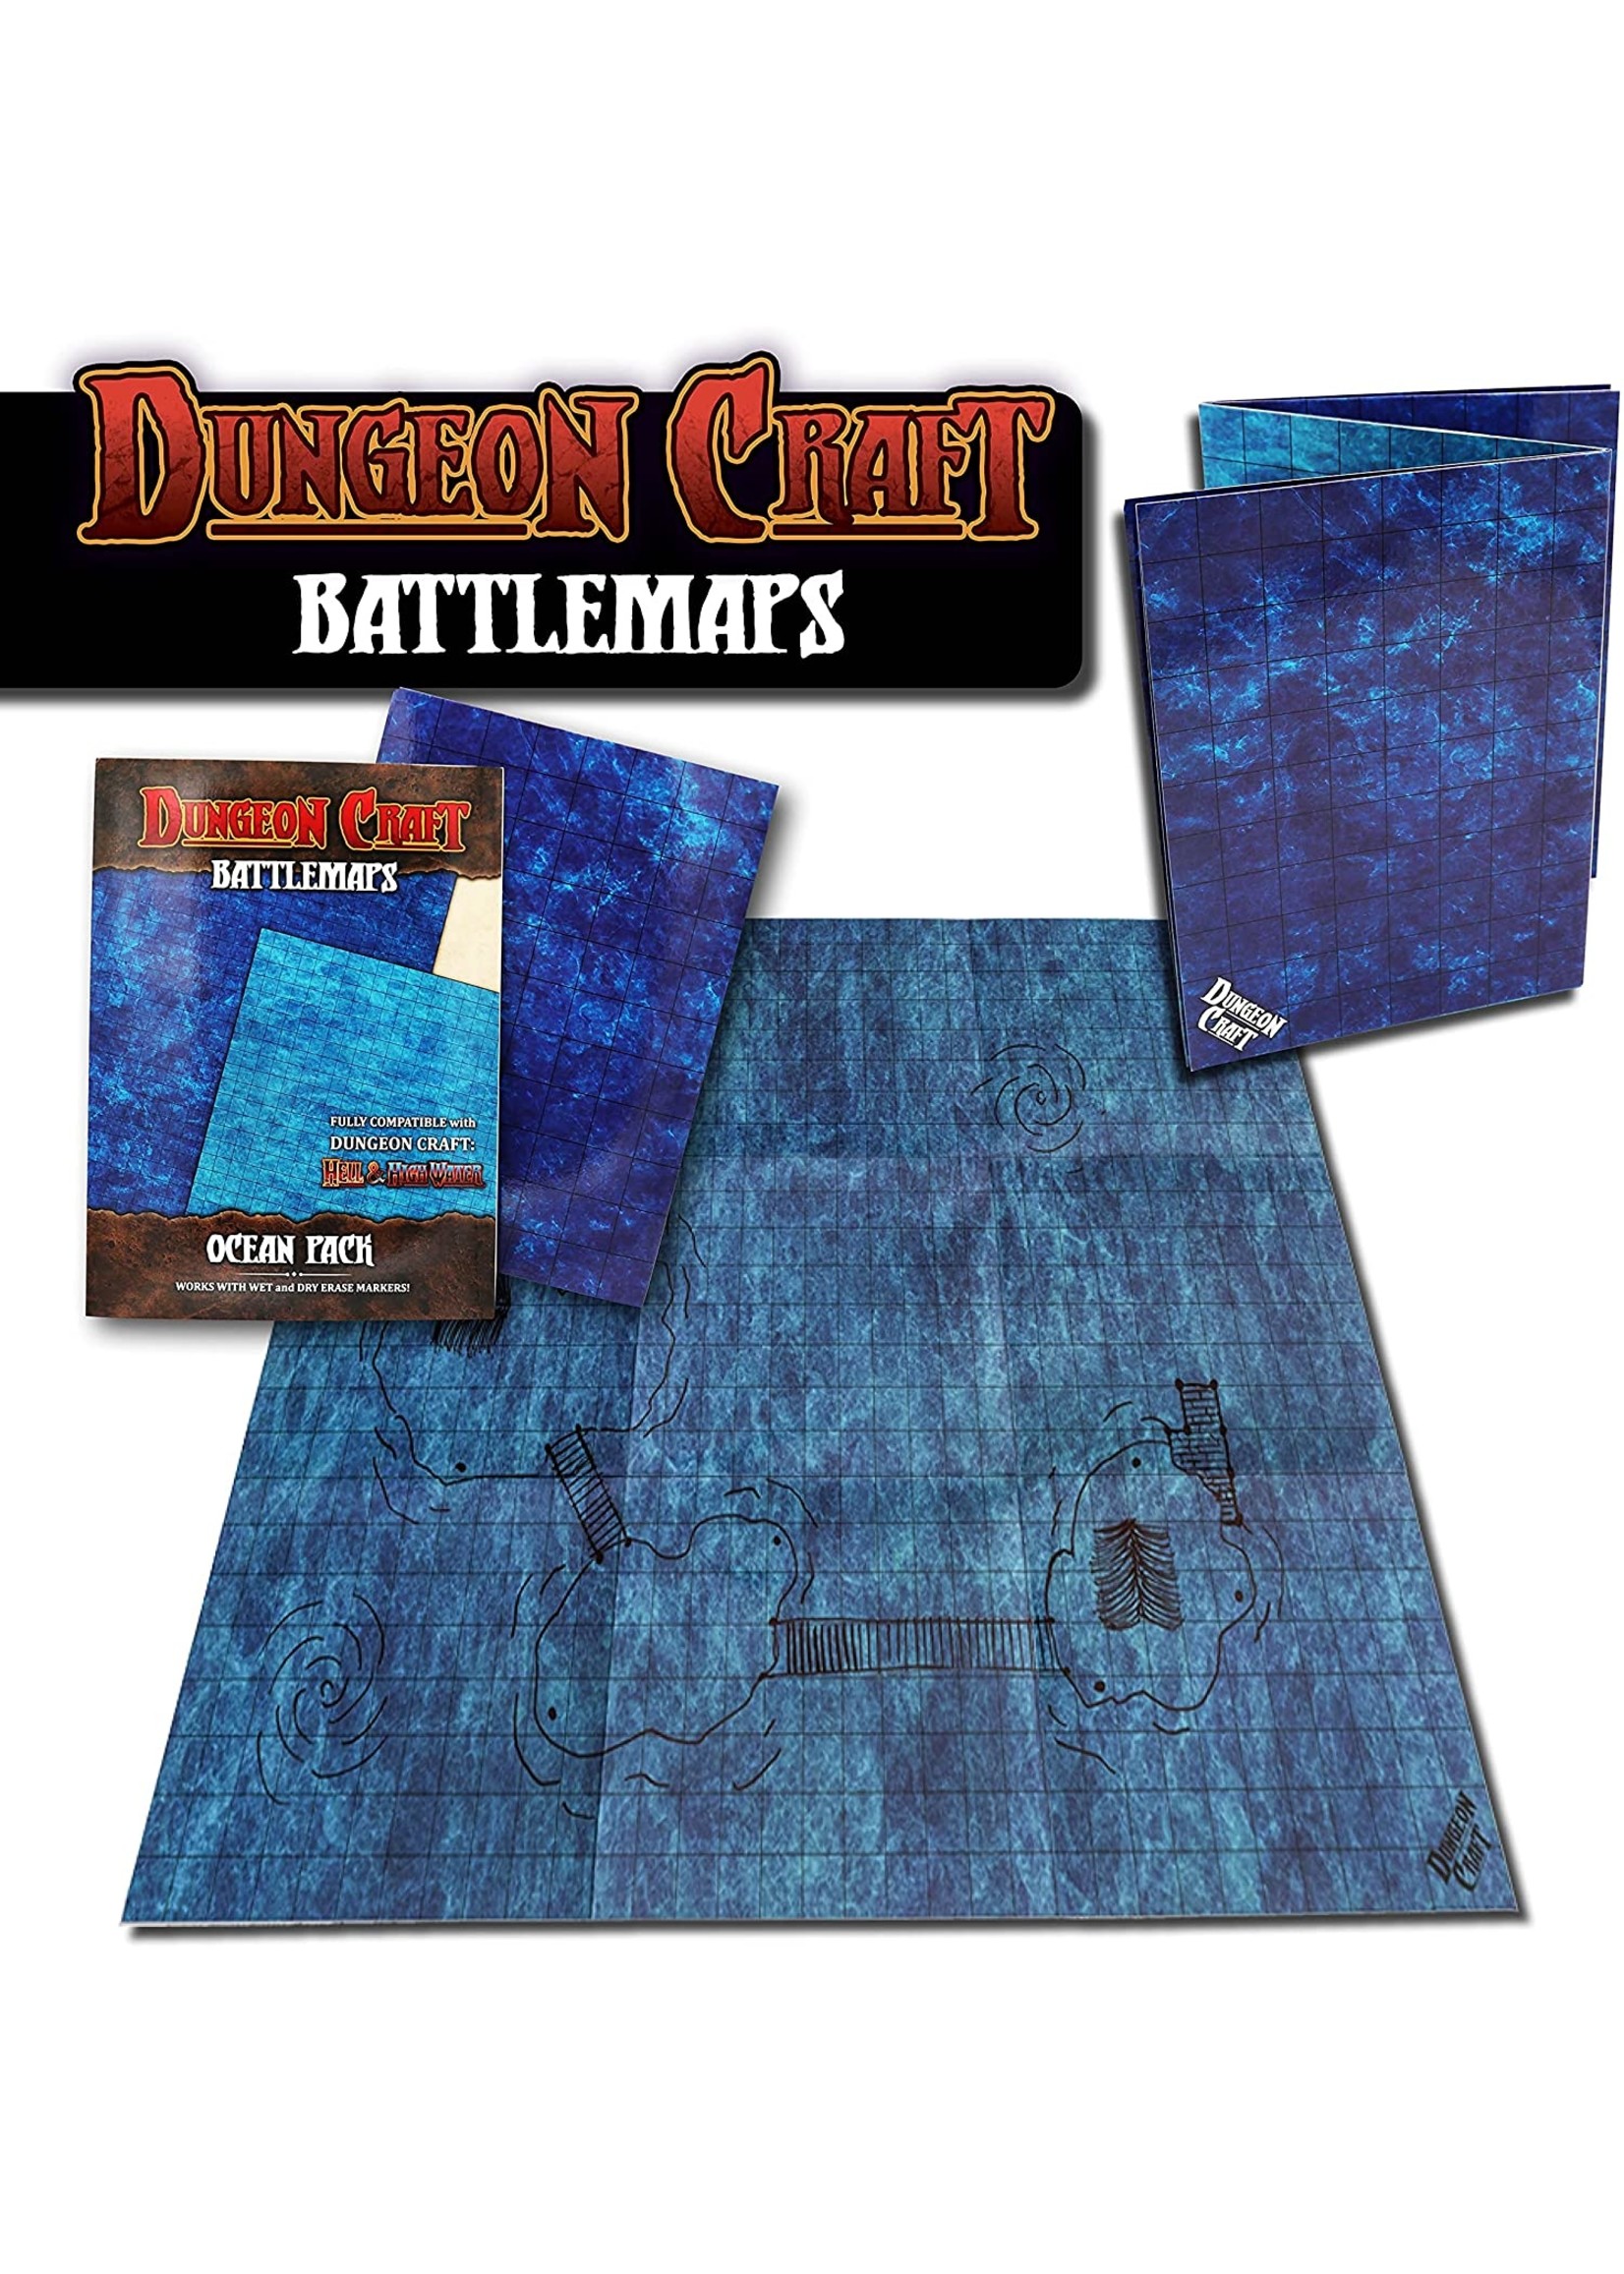 1985 Games Dungeon Craft Battlemaps: Ocean